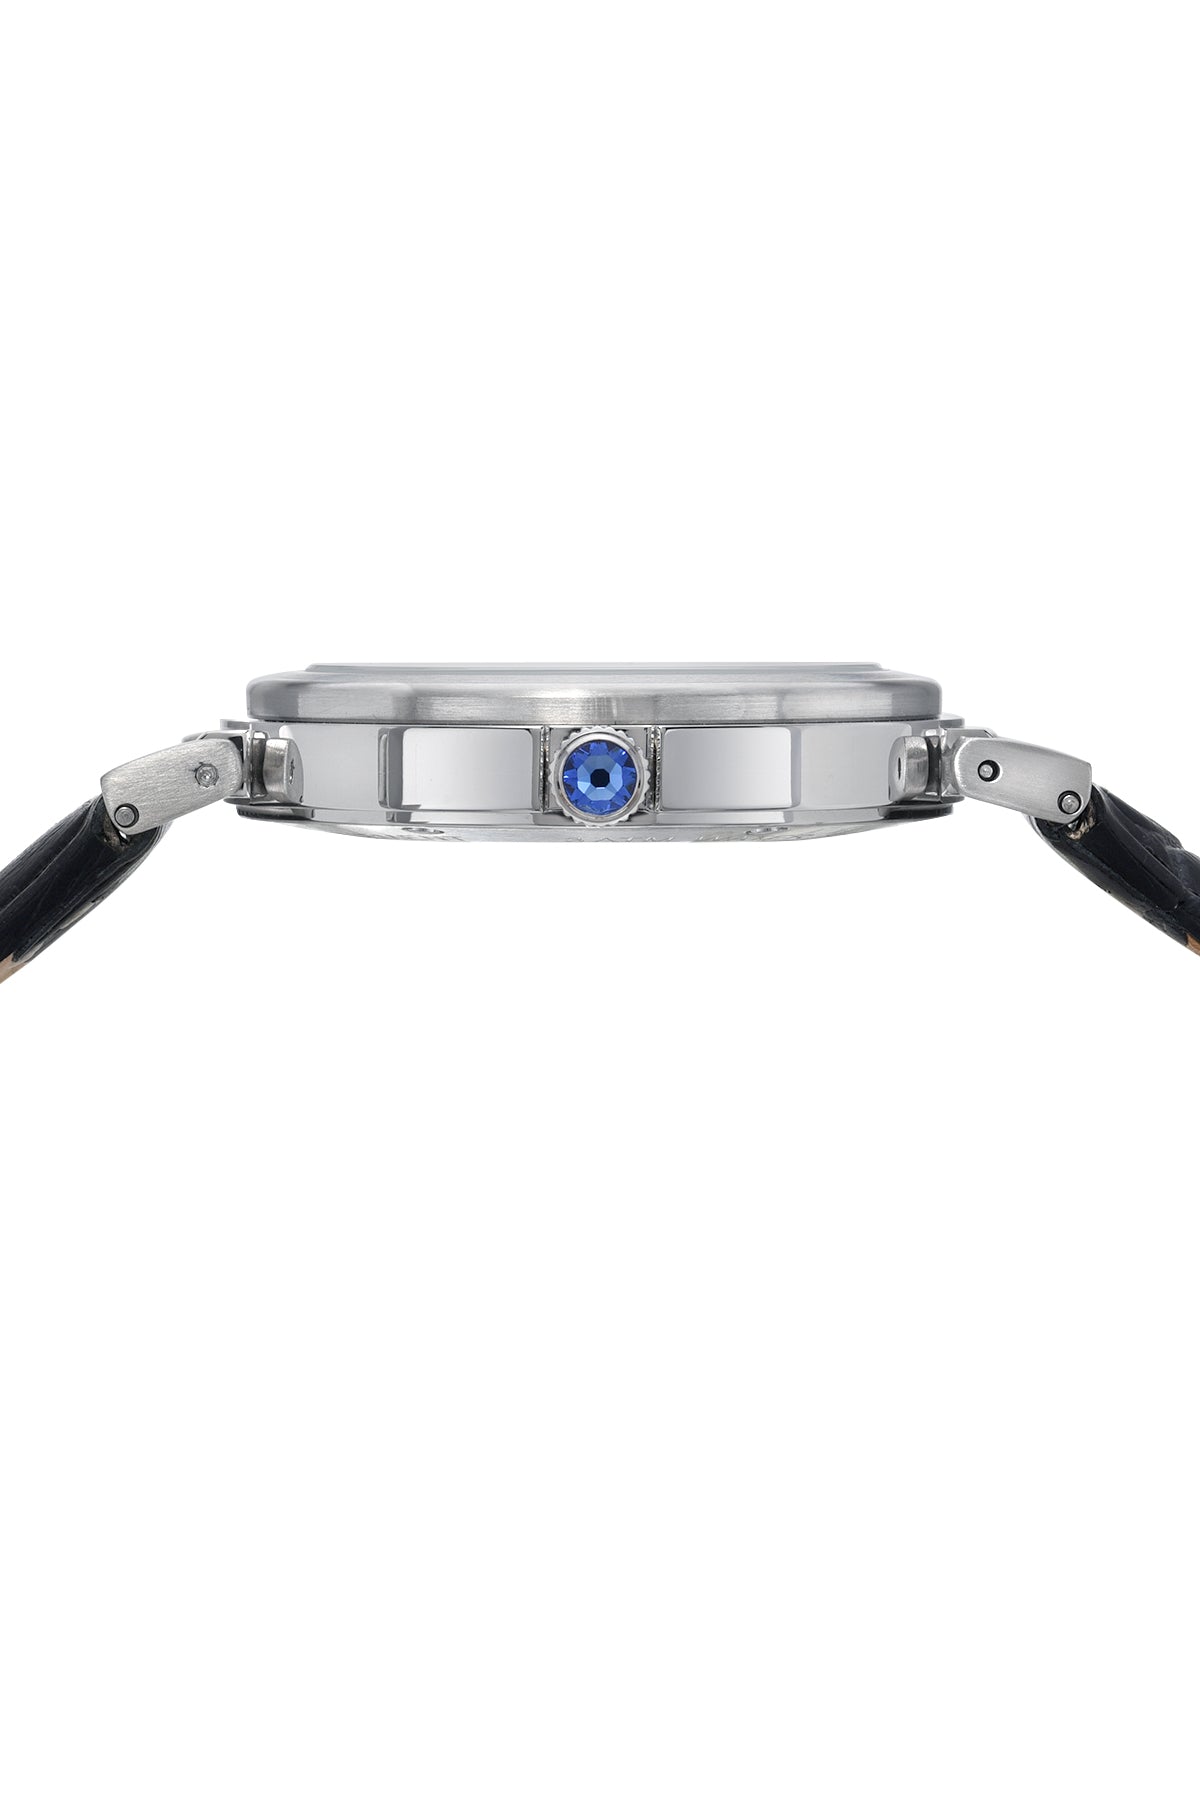 Porsamo Bleu Dahlia Luxury Crystal Hour Markers Women's Genuine Leather Band Watch, Silver, Black 1051ADAL